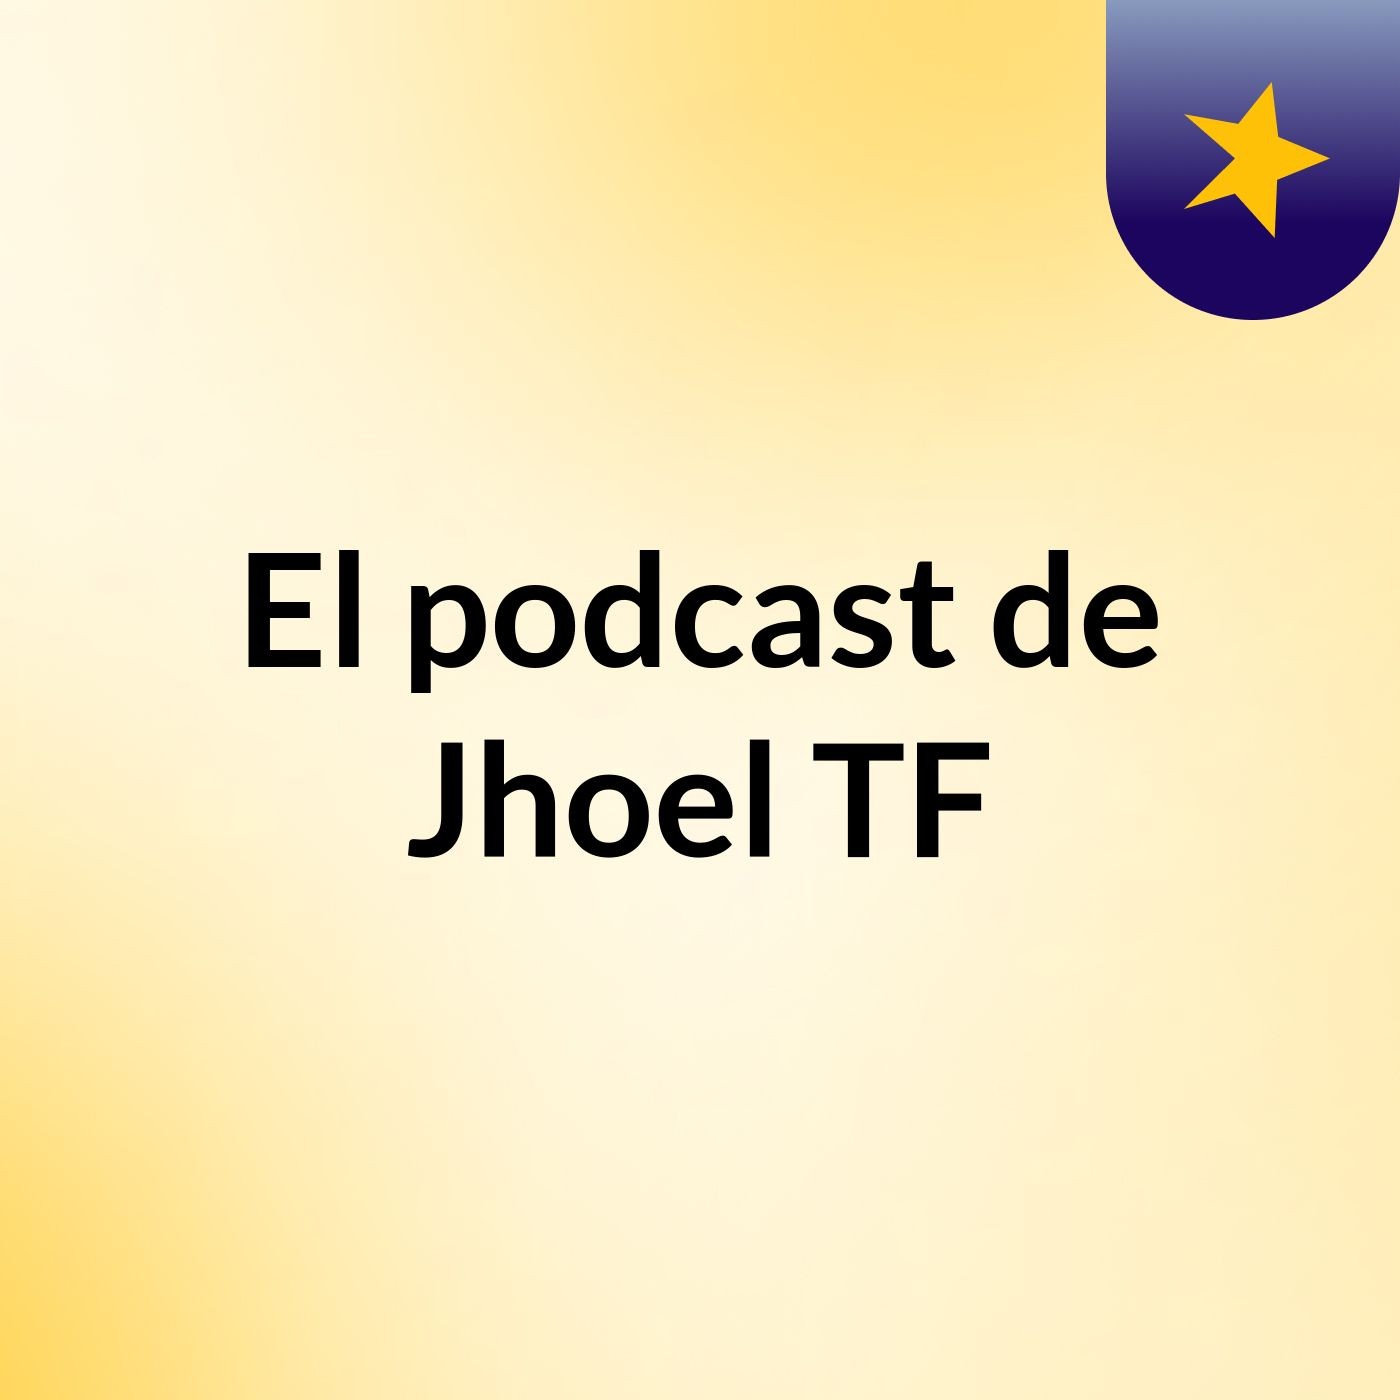 El podcast de Jhoel TF